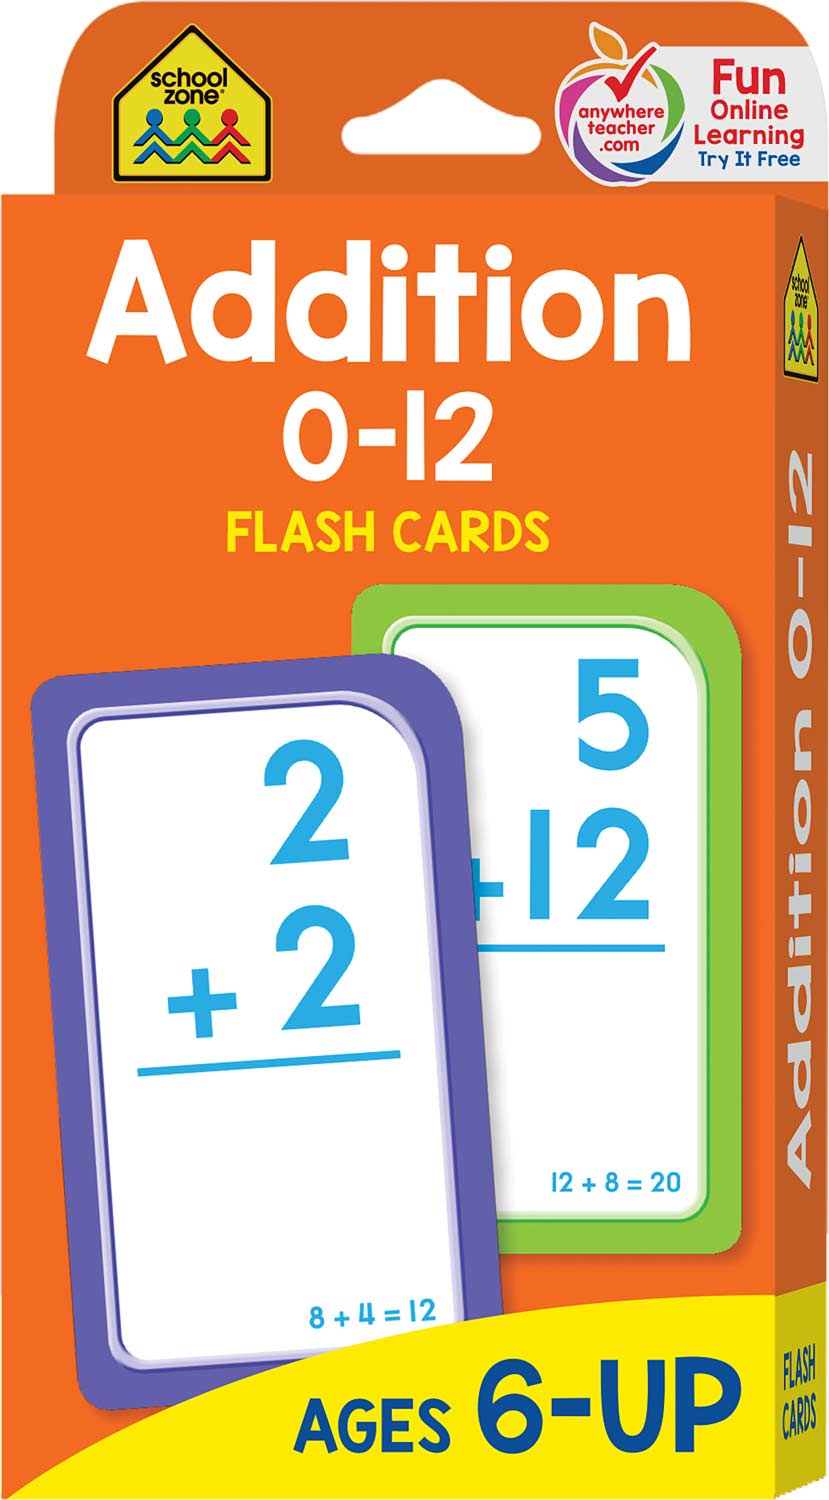 addition-0-12-flash-cards-kool-child